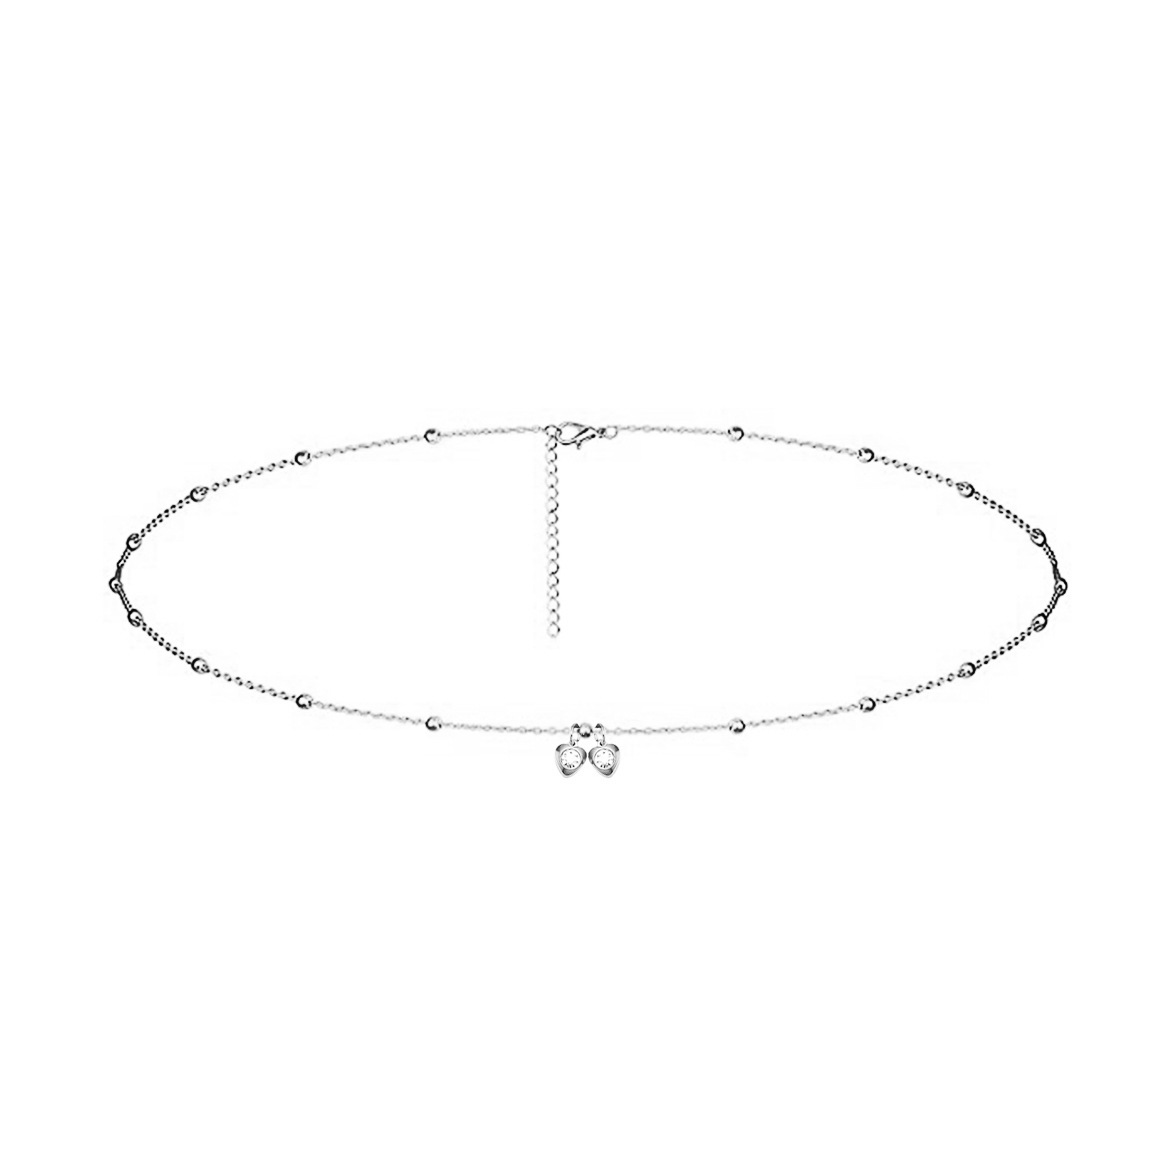 ALAD197-01-bead chain silver 70cm-20cm